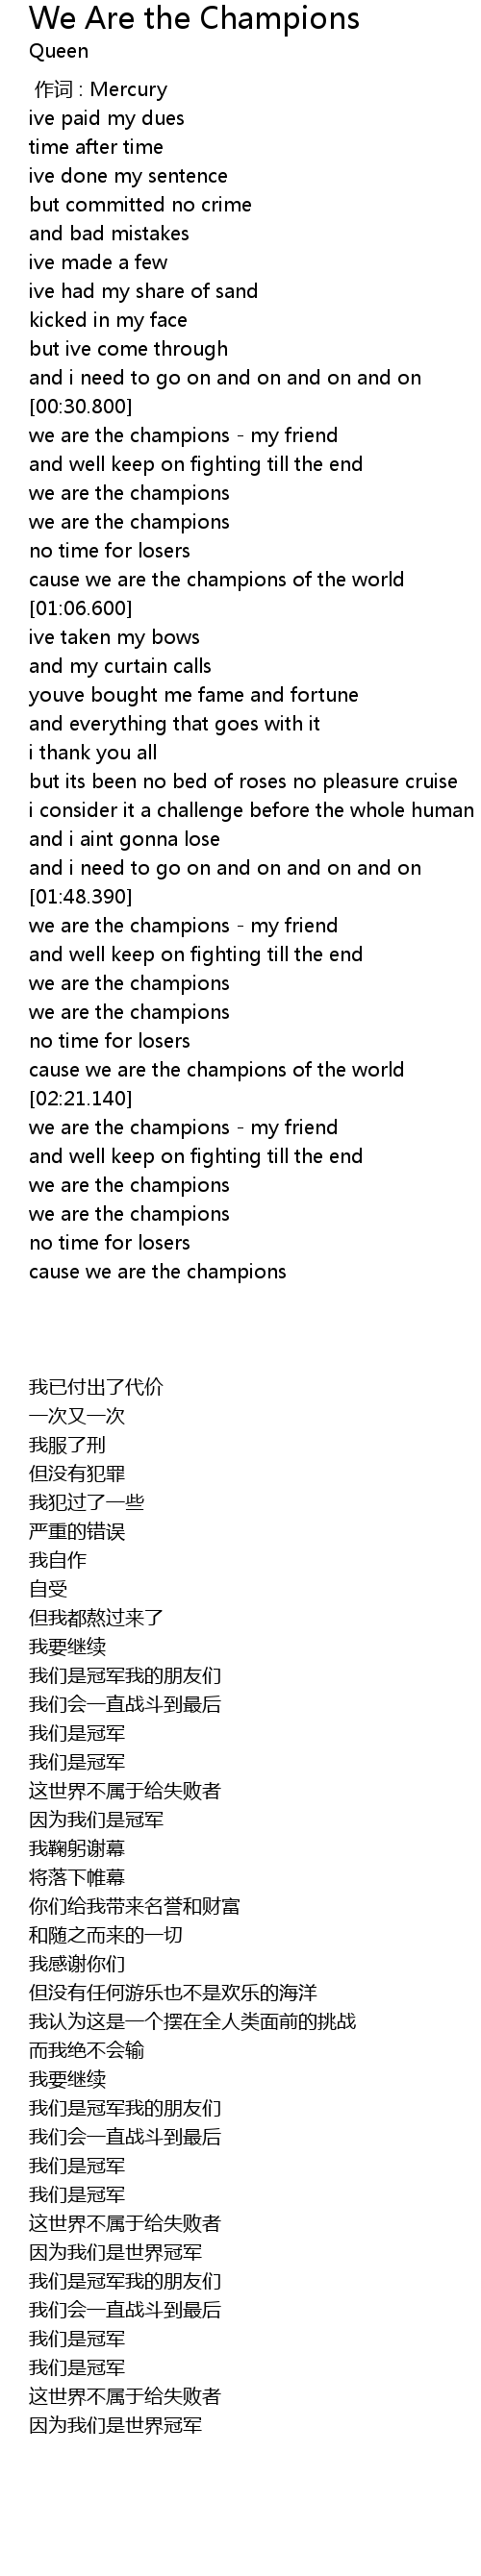 We the Champions Lyrics - Lyrics